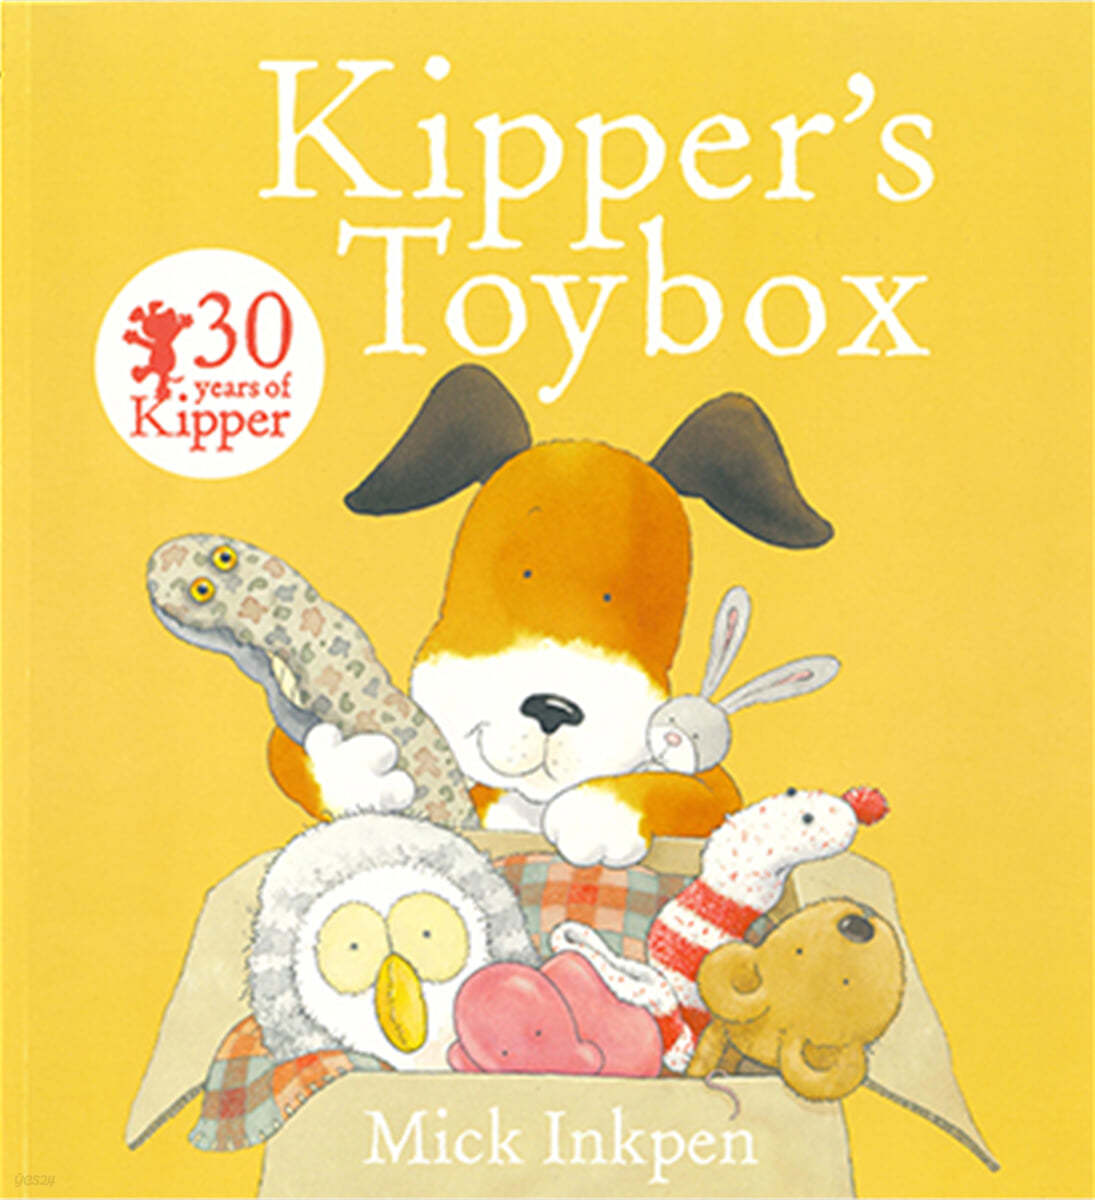 Kippers toybox